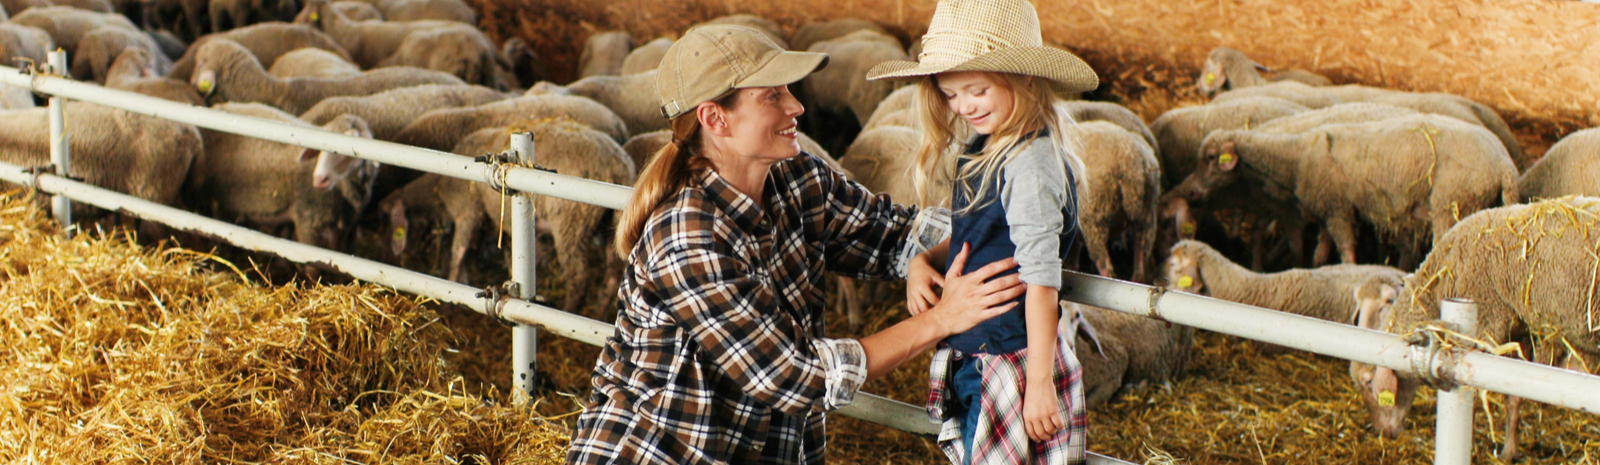 Girl with mom and sheep